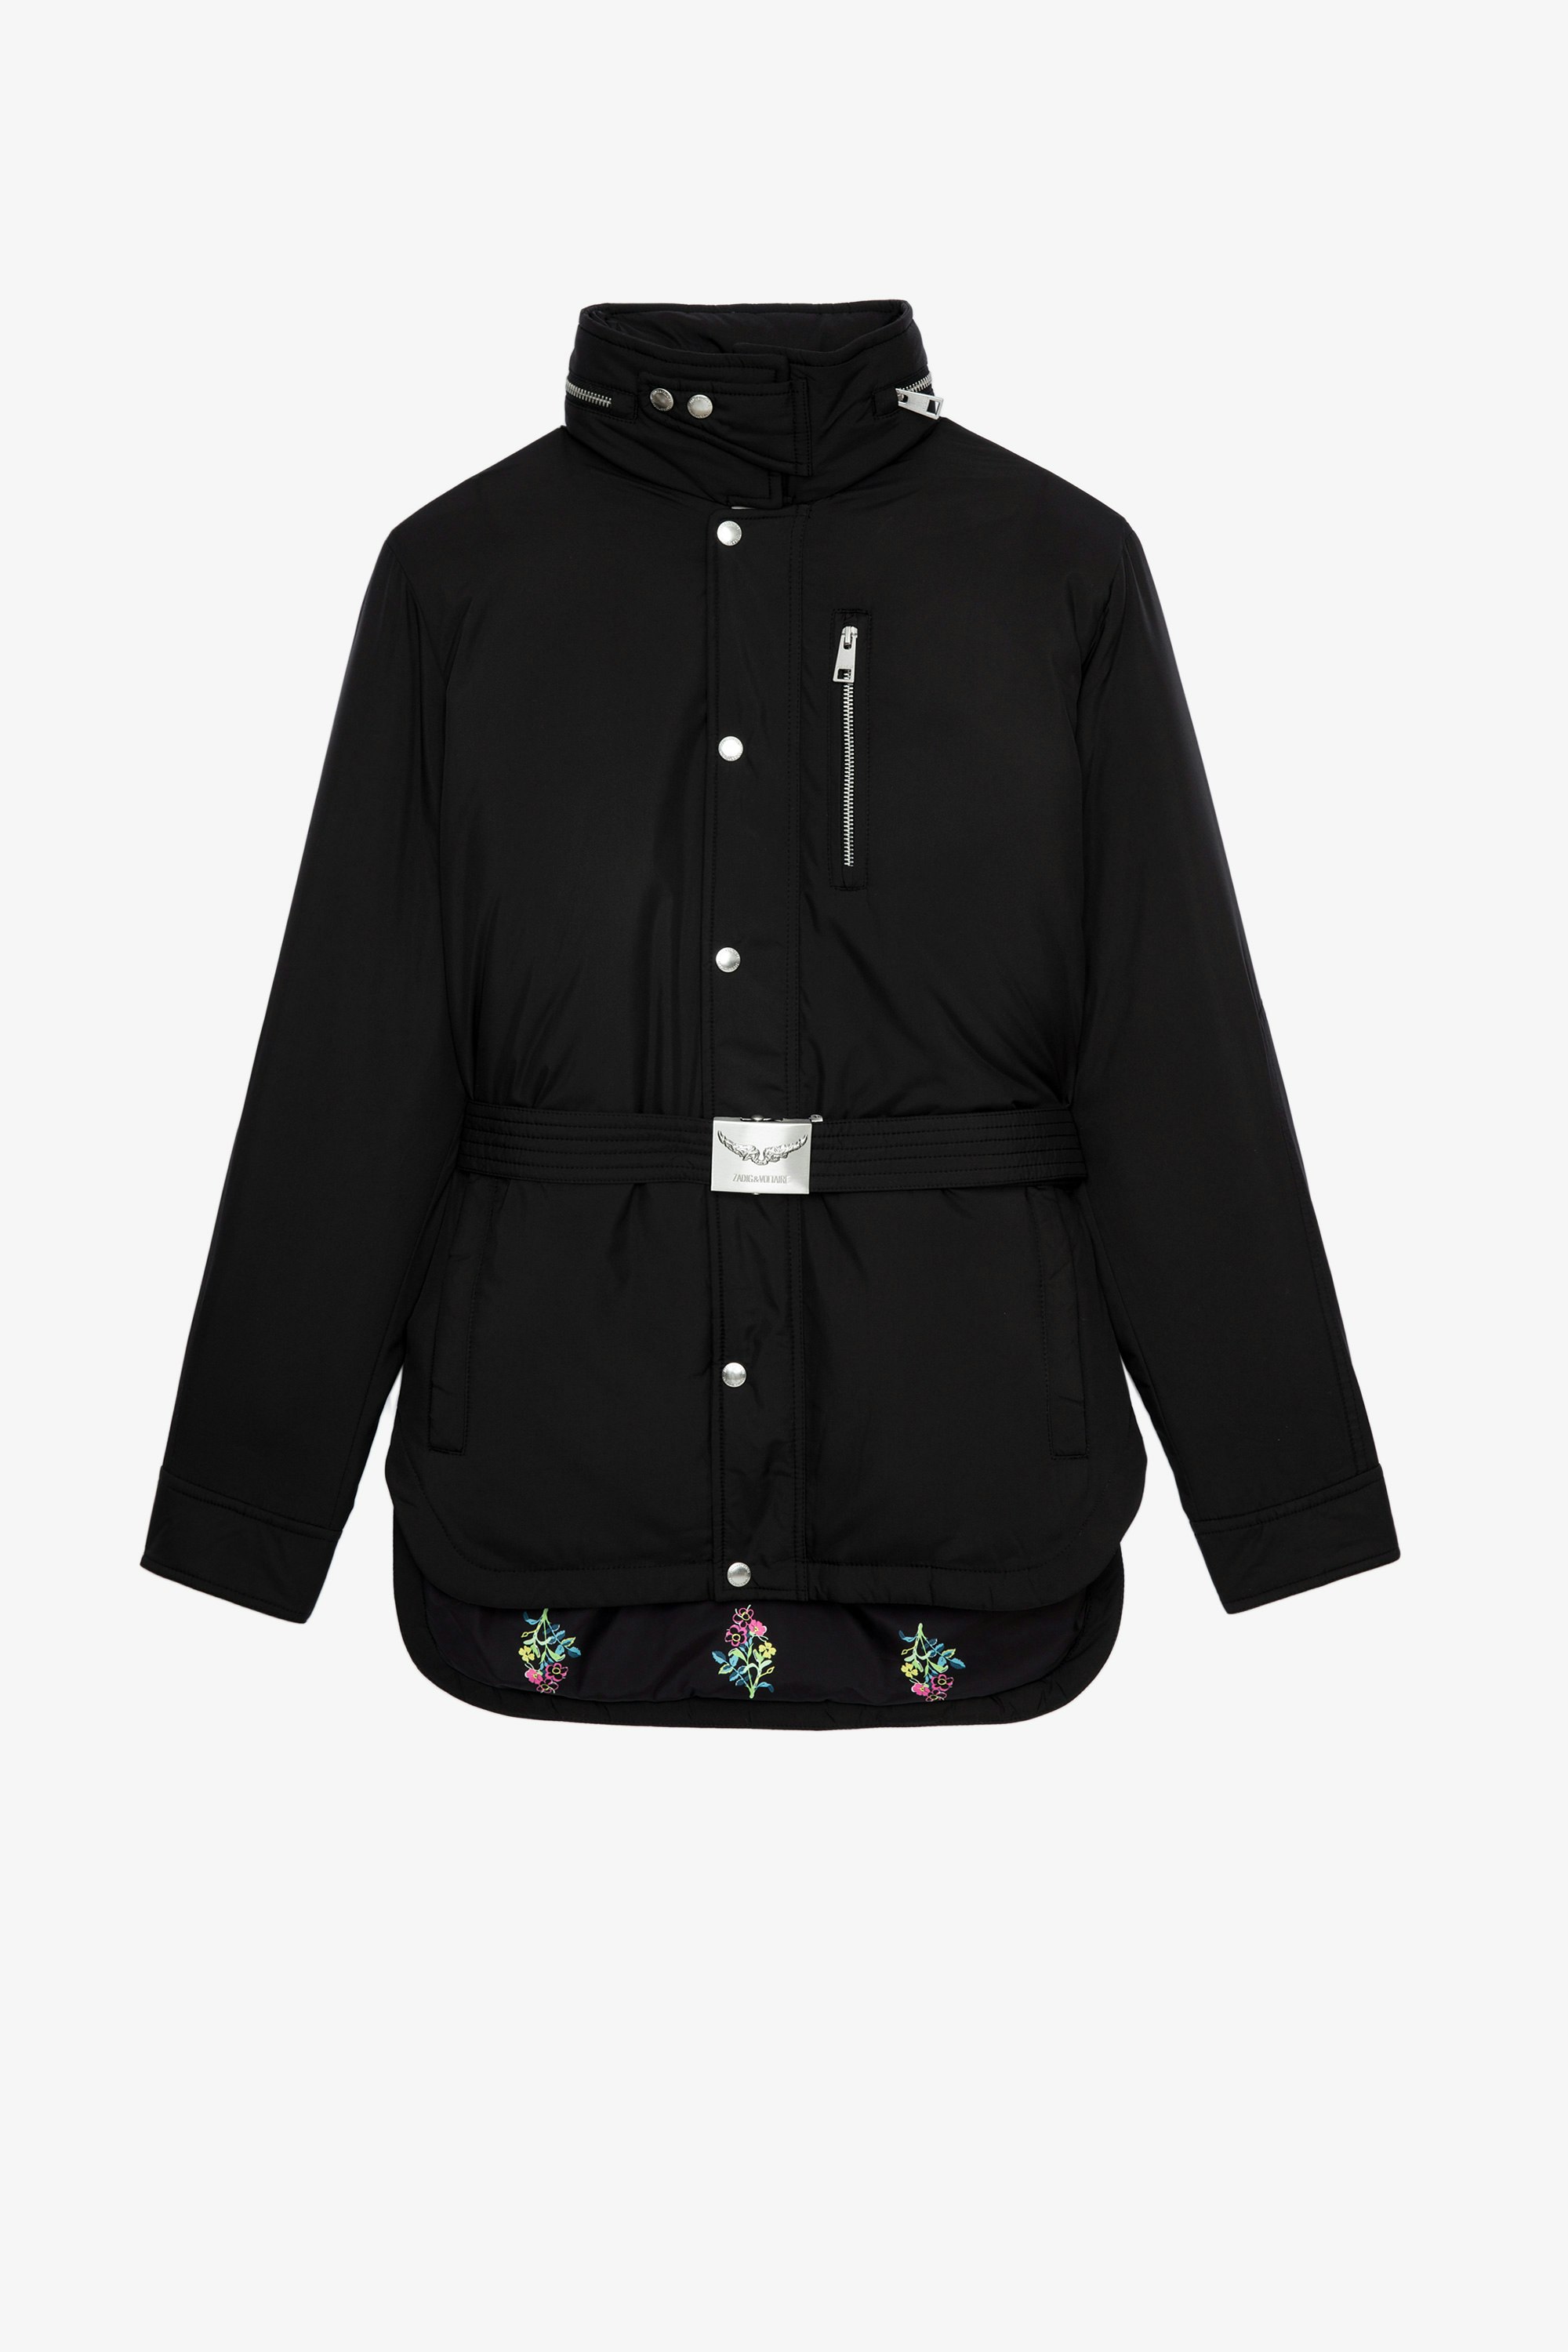 Kalice Coat Women’s black nylon coat with hood and buckle belt